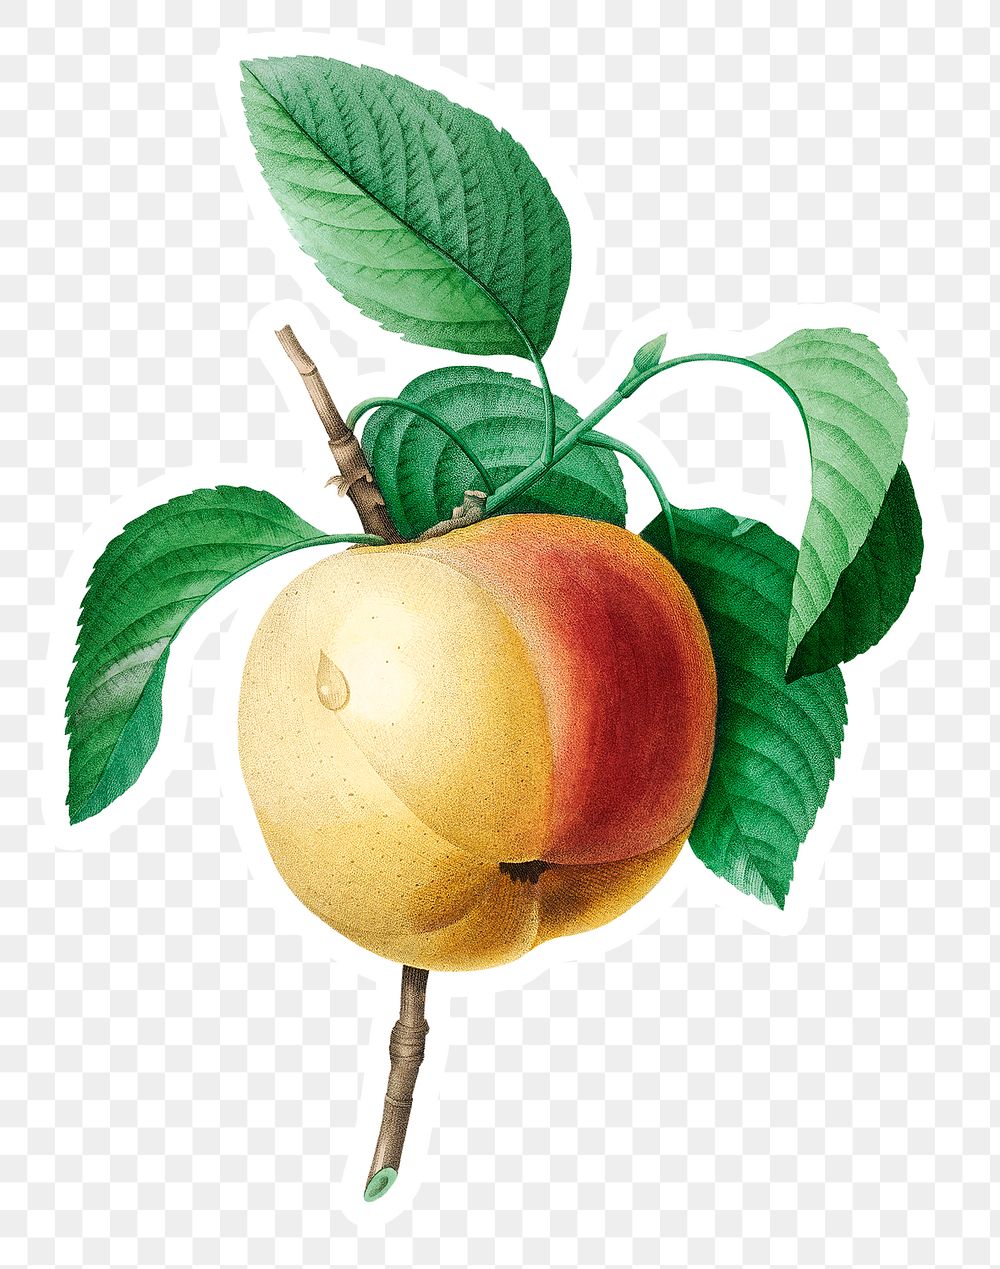 Apple fruit sticker design element 